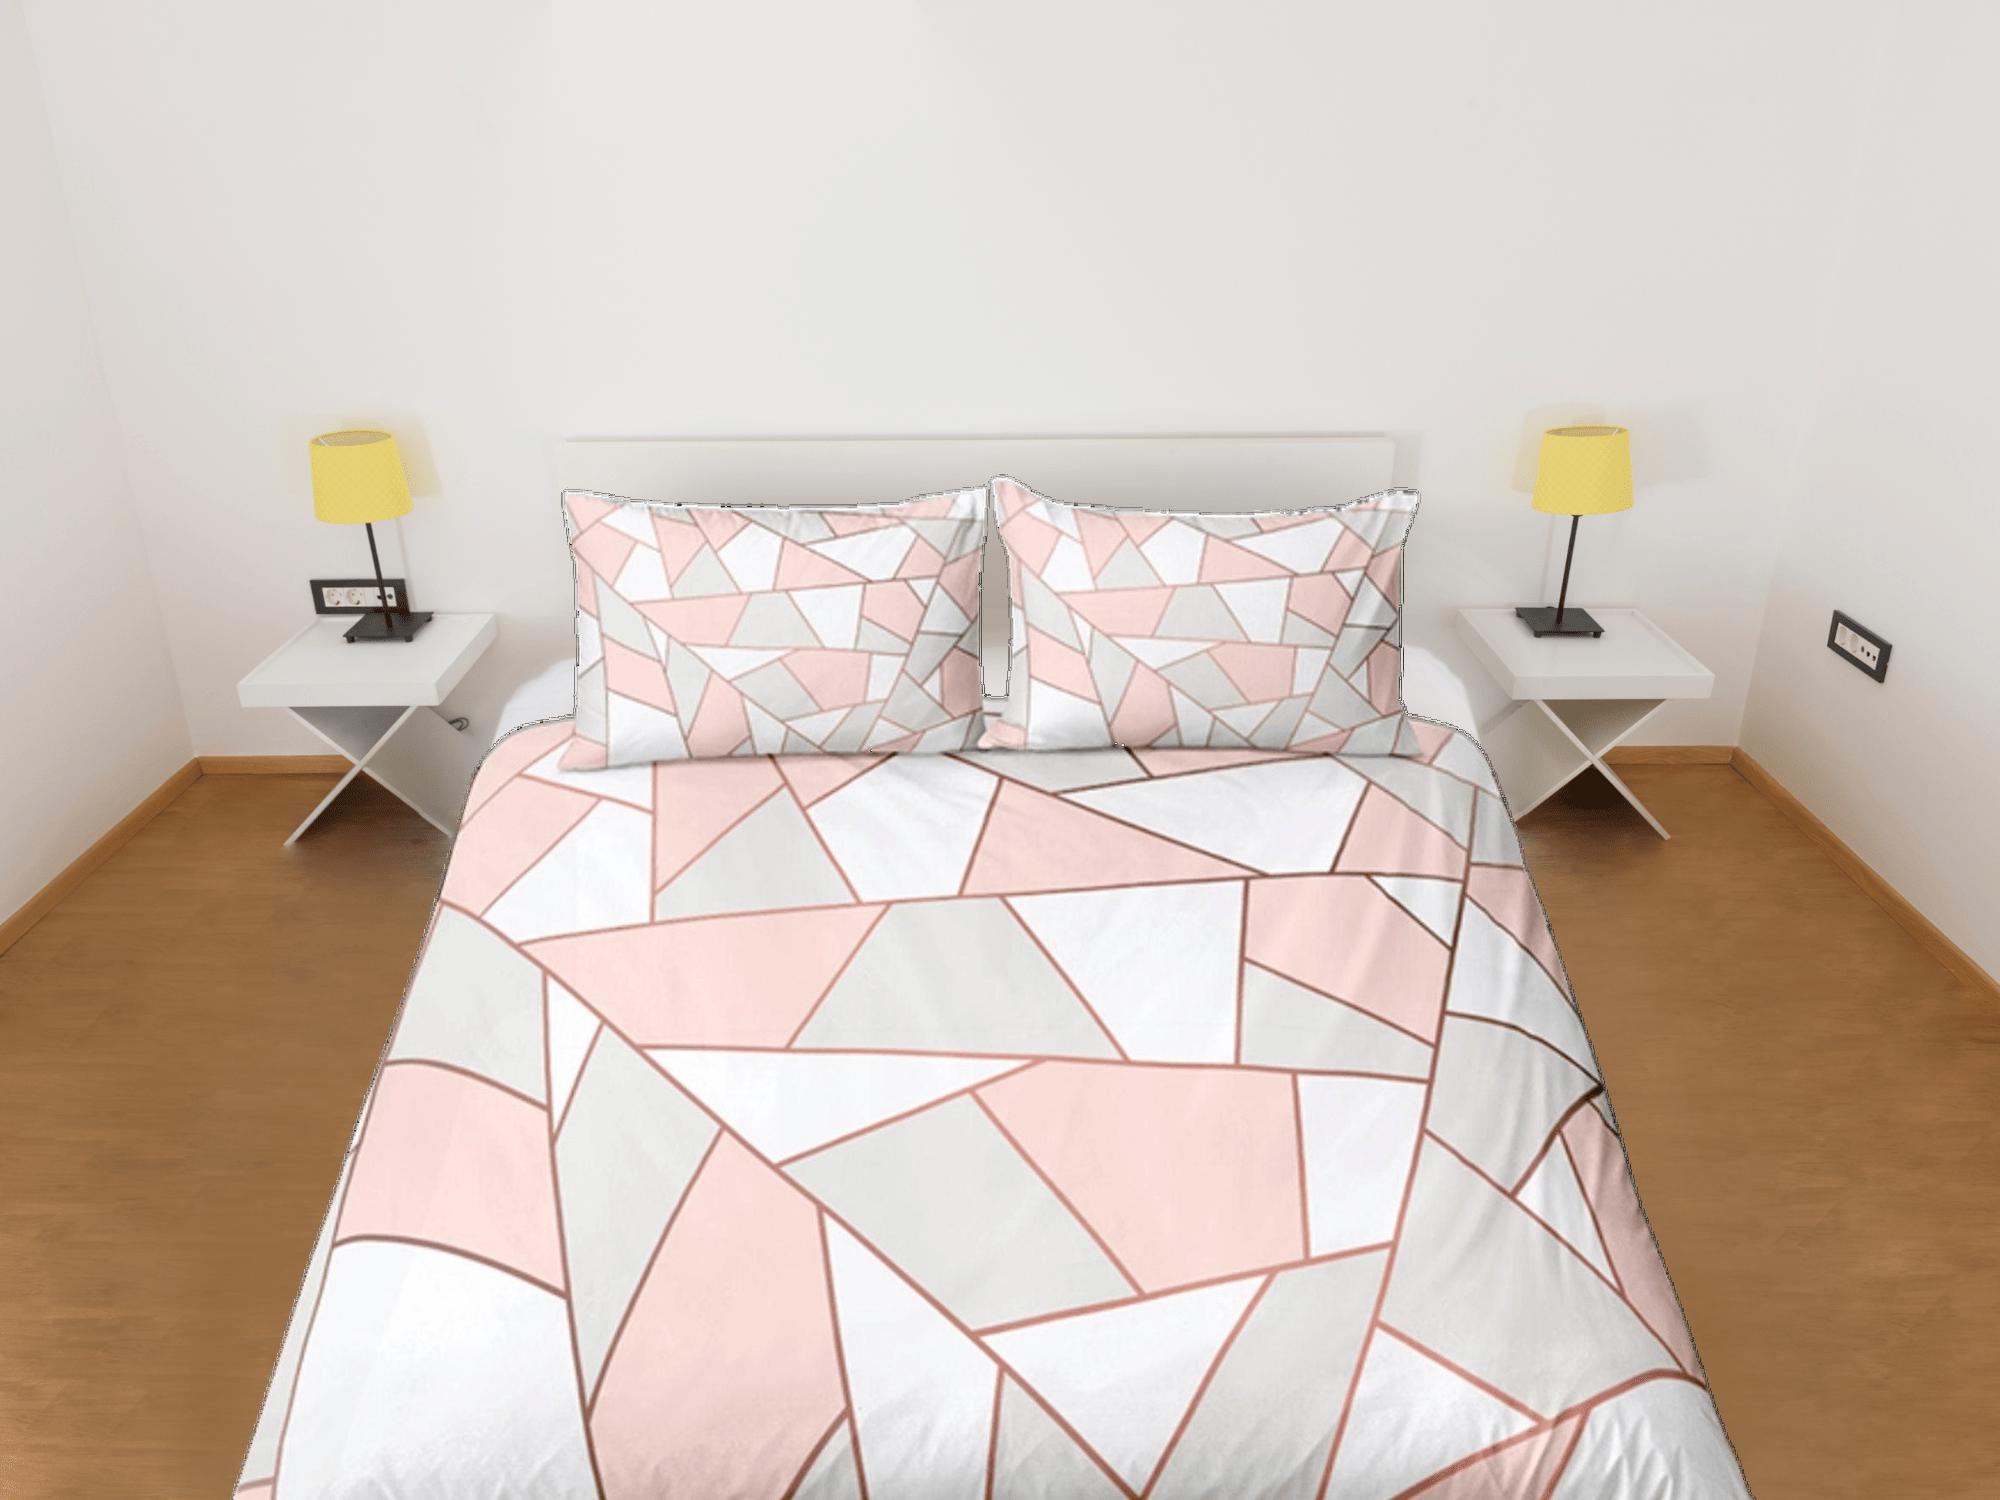 daintyduvet Modern Polygon Pink Duvet Cover Colorful Dorm Bedding Set Full Abstract Design Bedspread